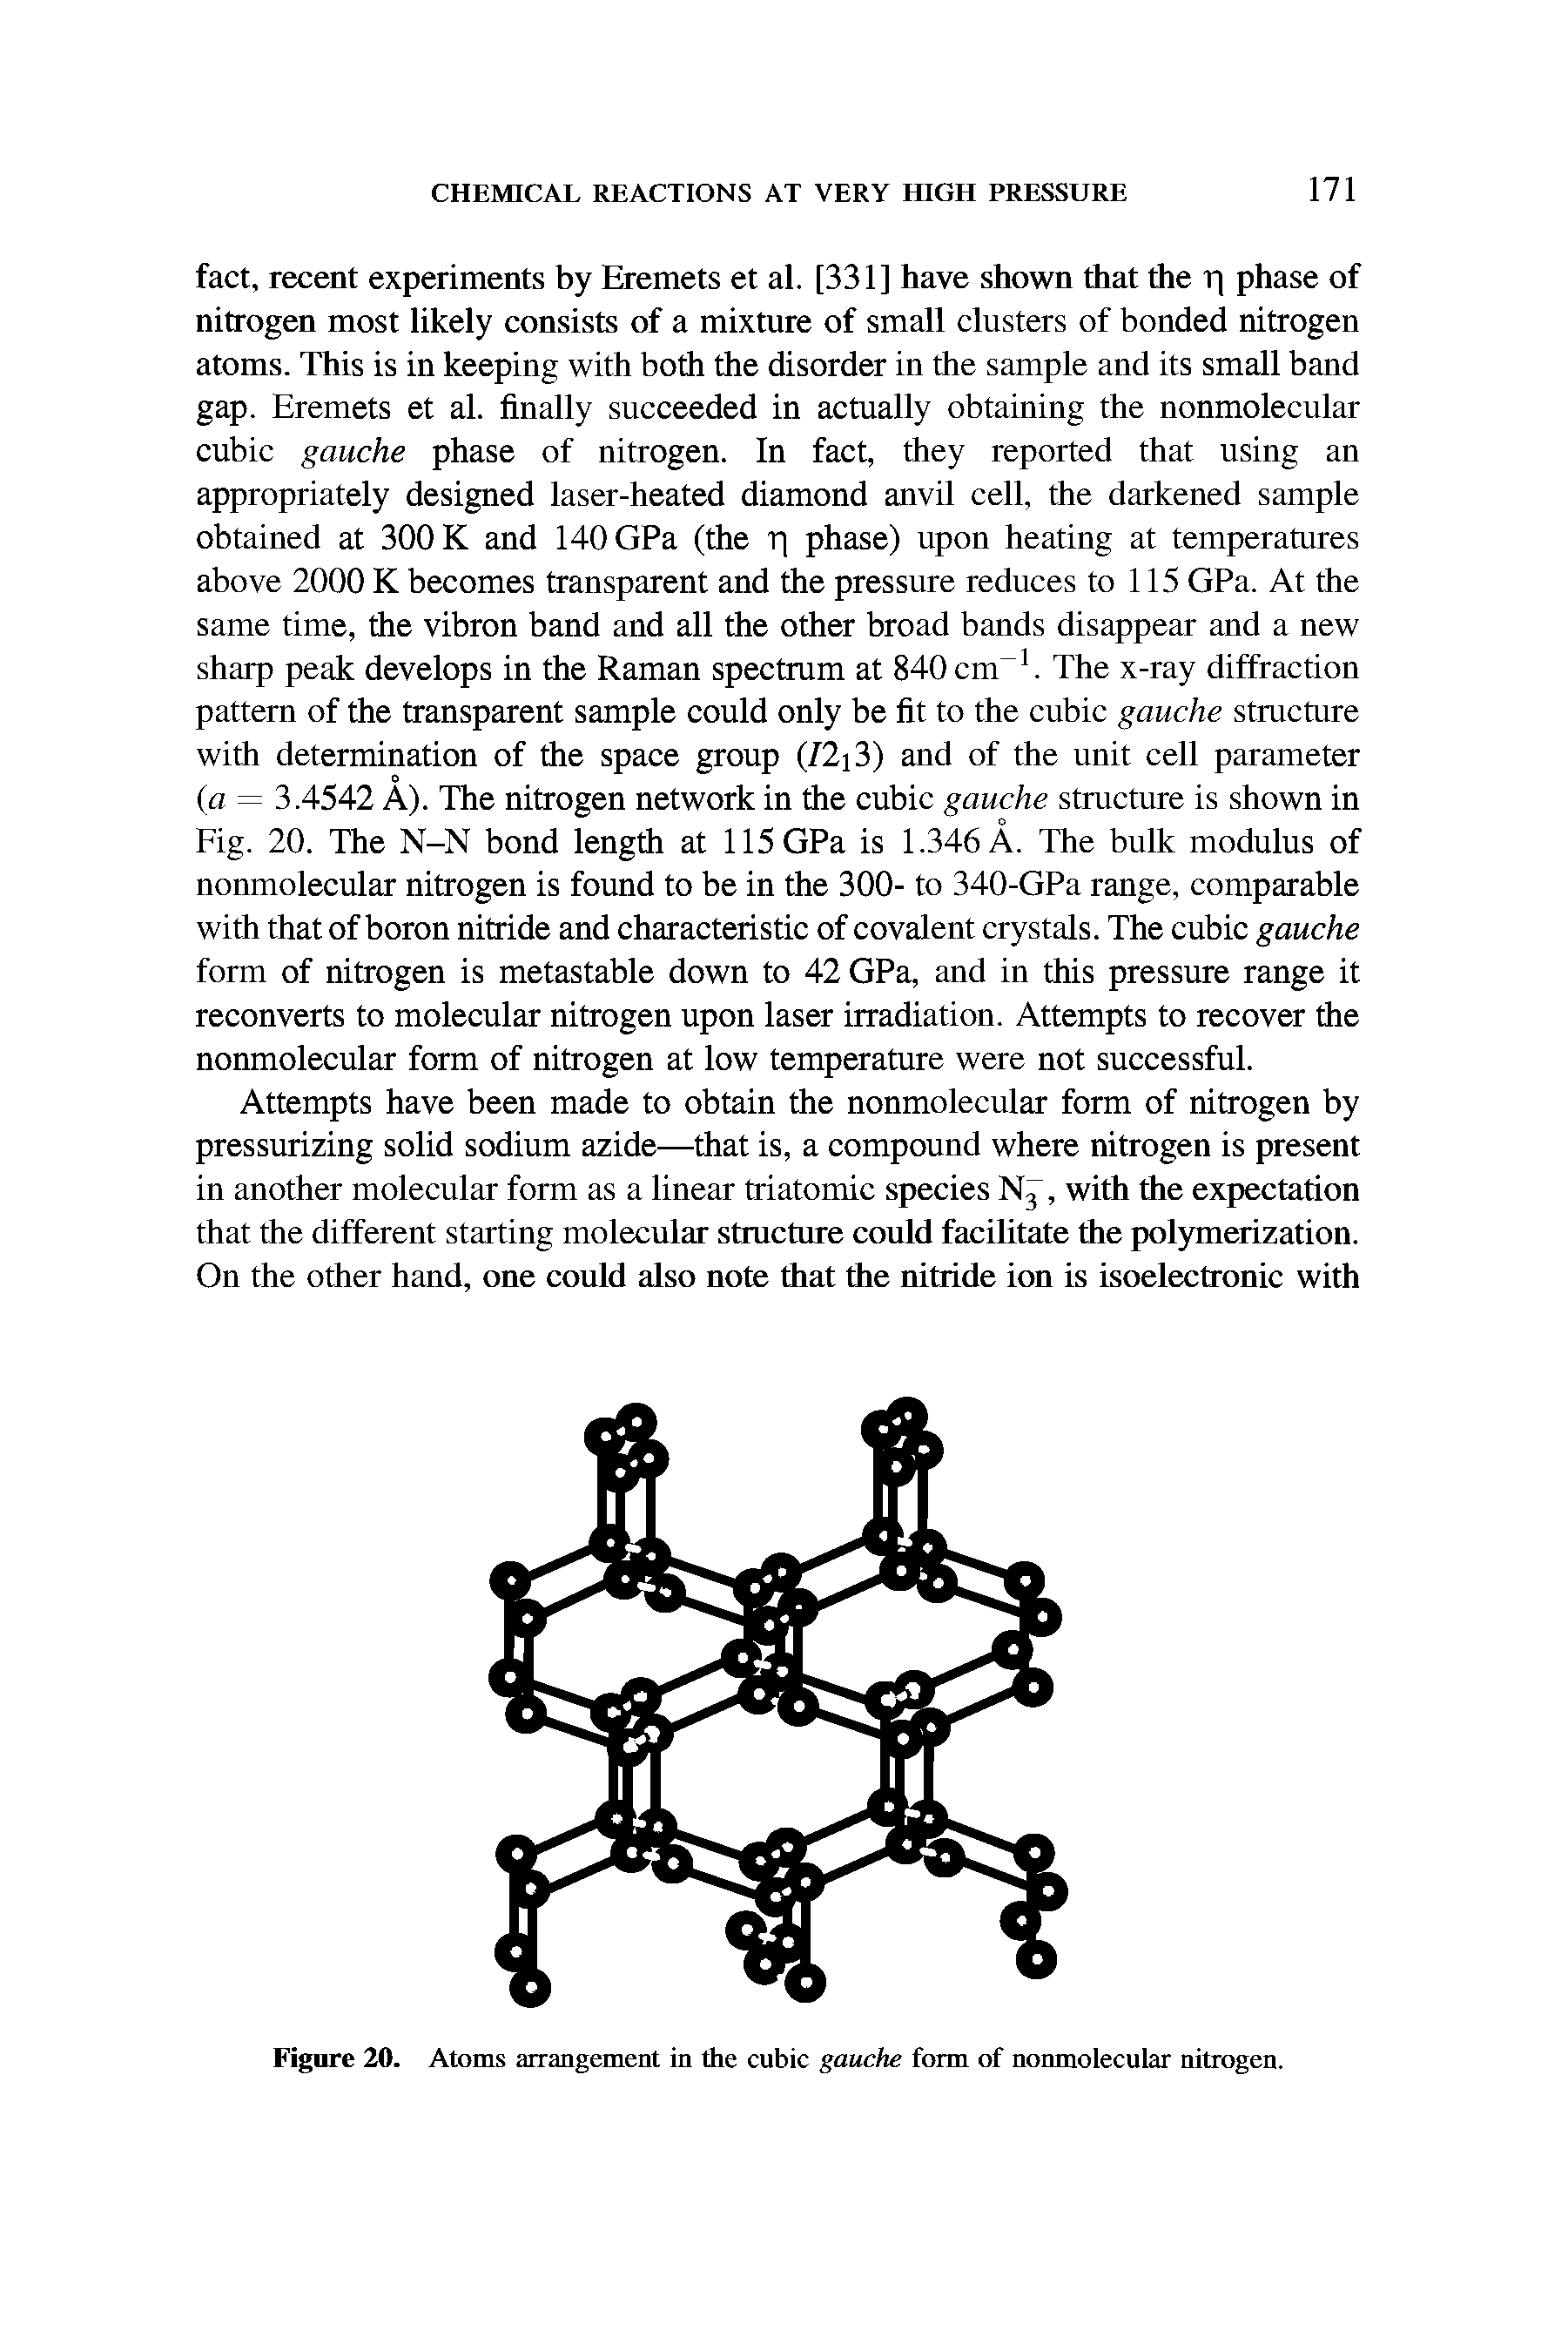 Figure 20. Atoms arrangement in the cubic gauche form of nonmolecular nitrogen.